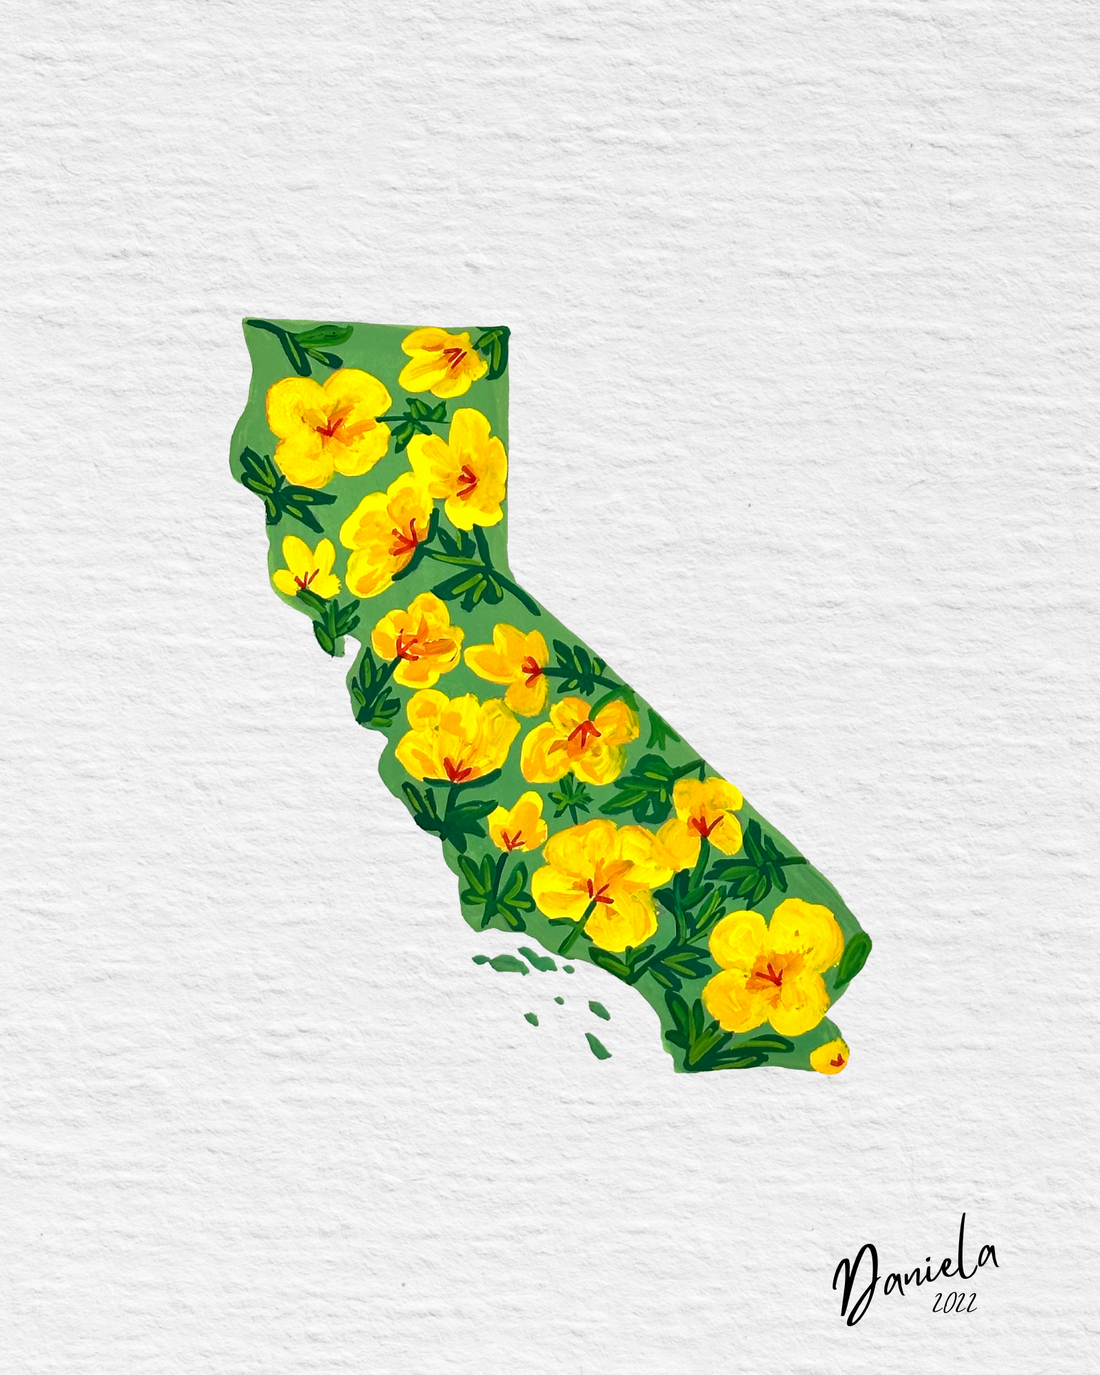 California State Flower original